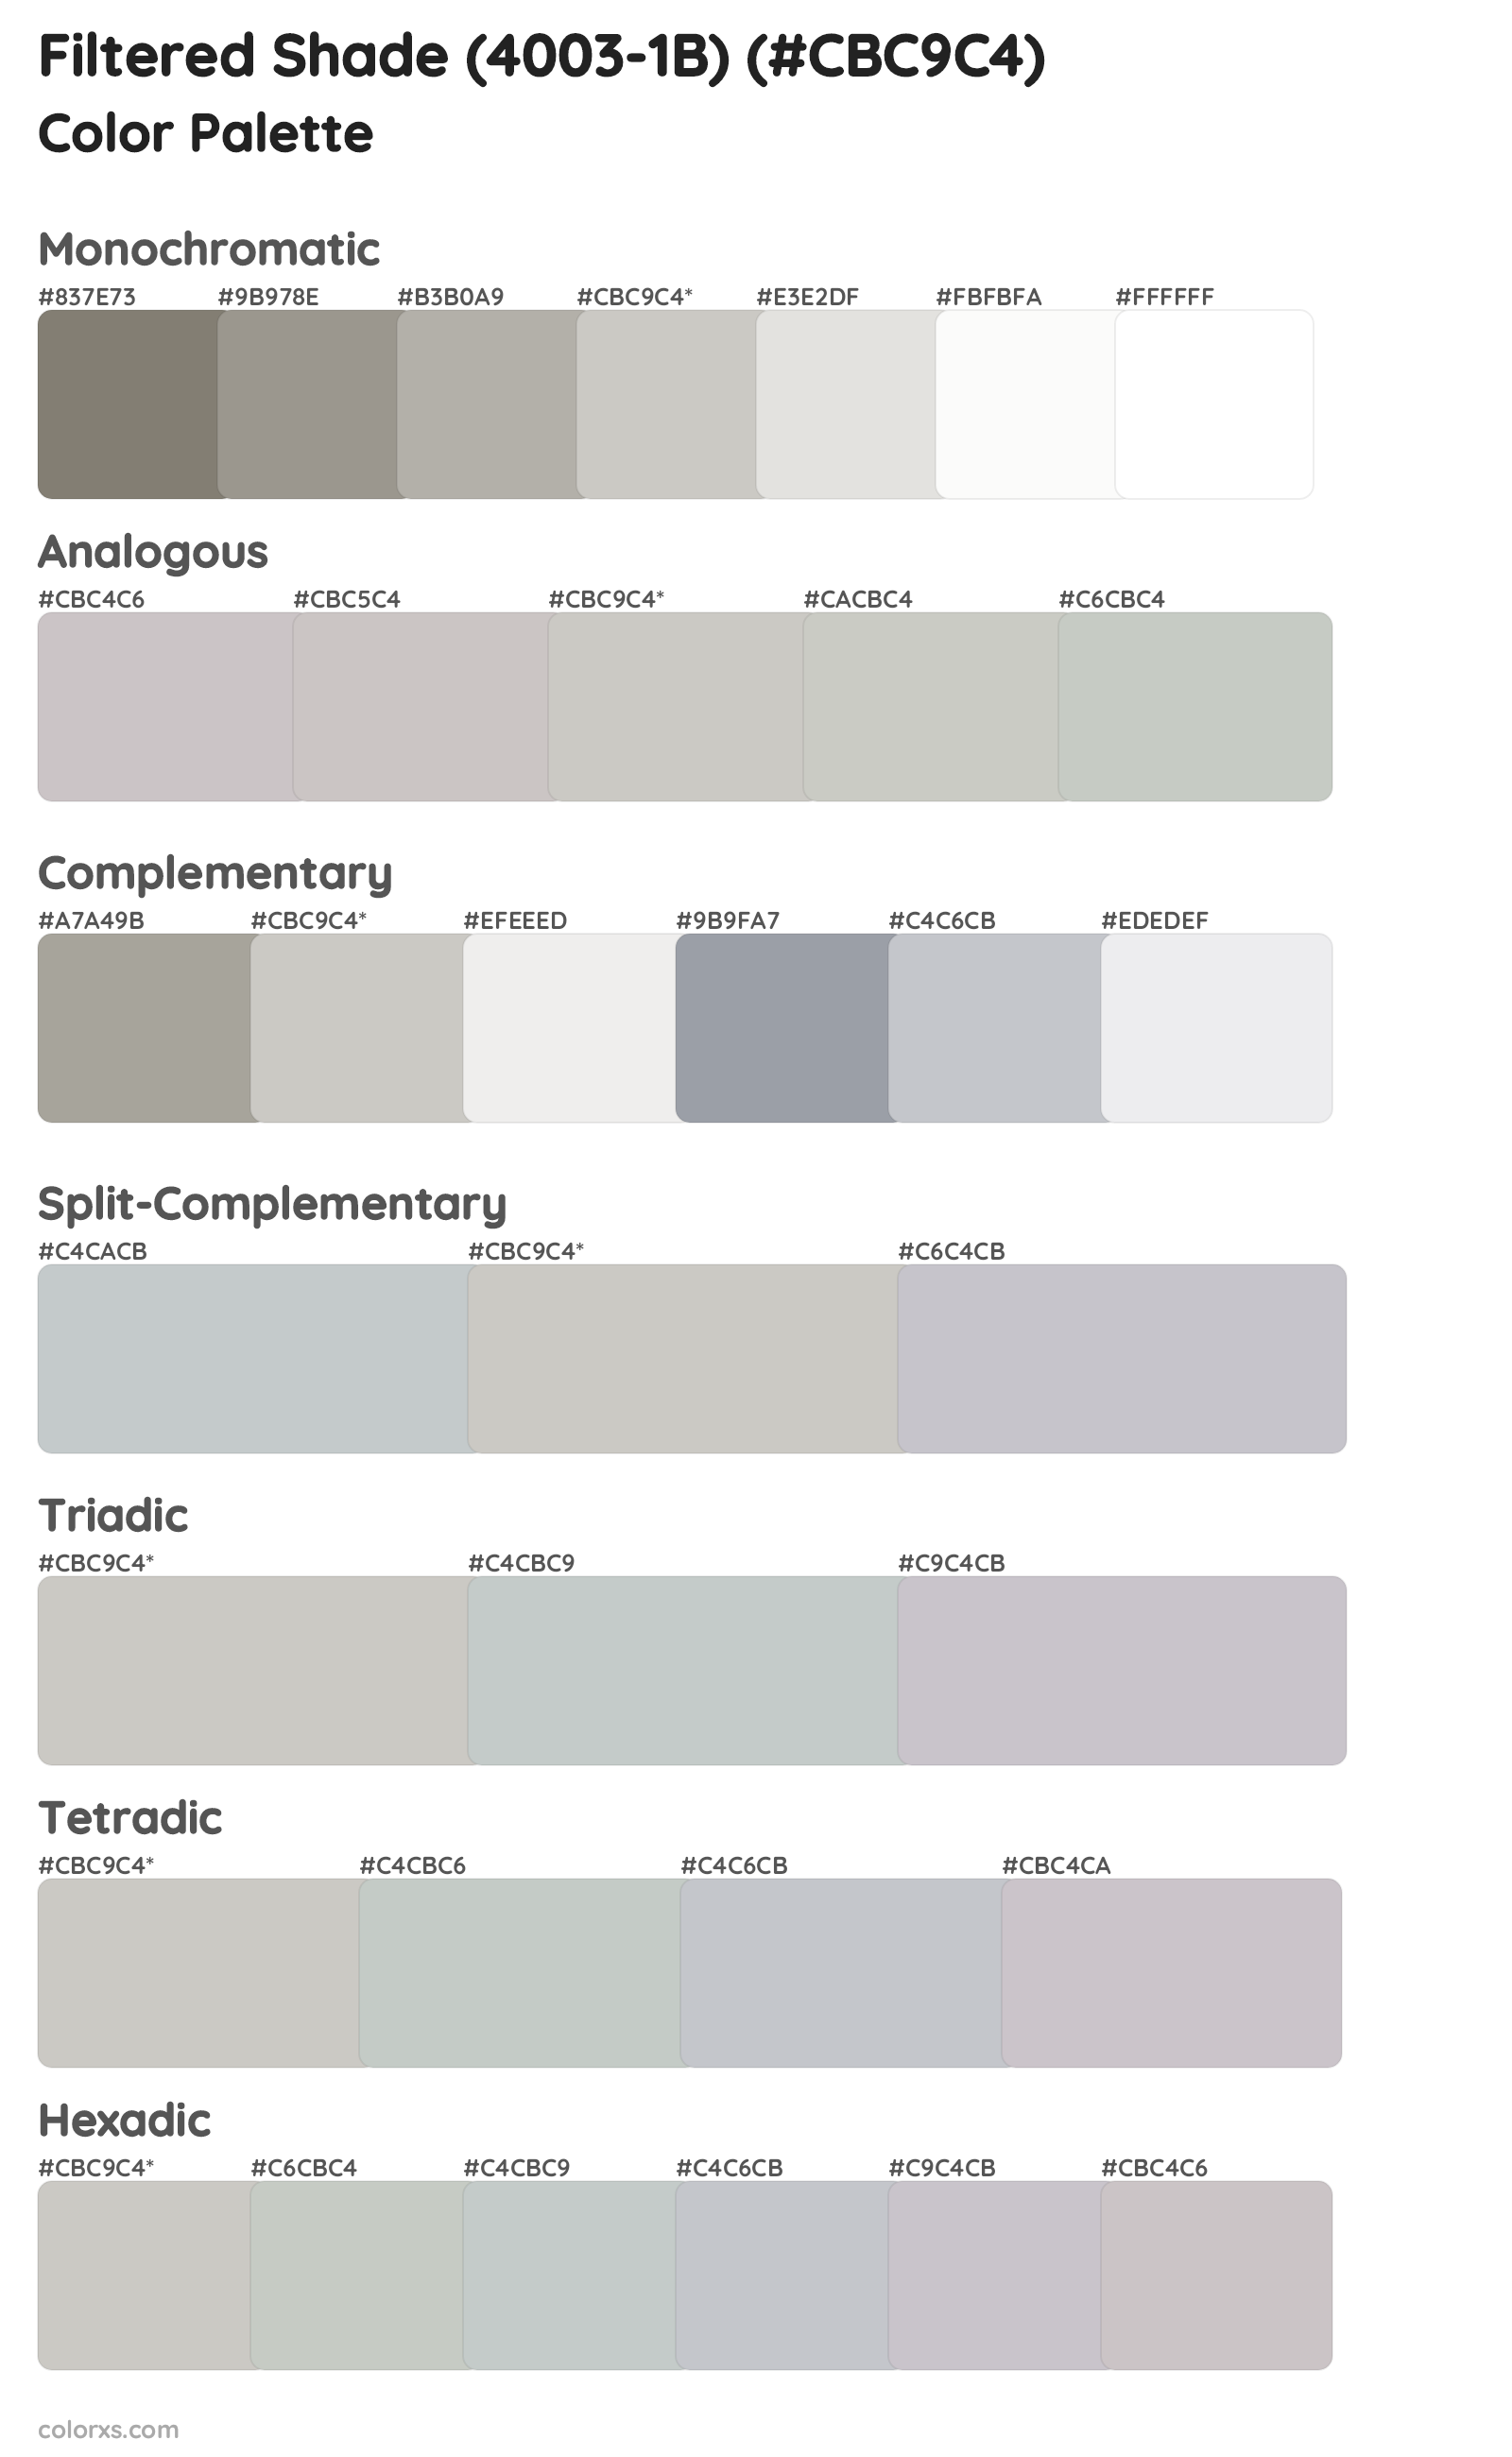 Filtered Shade (4003-1B) Color Scheme Palettes